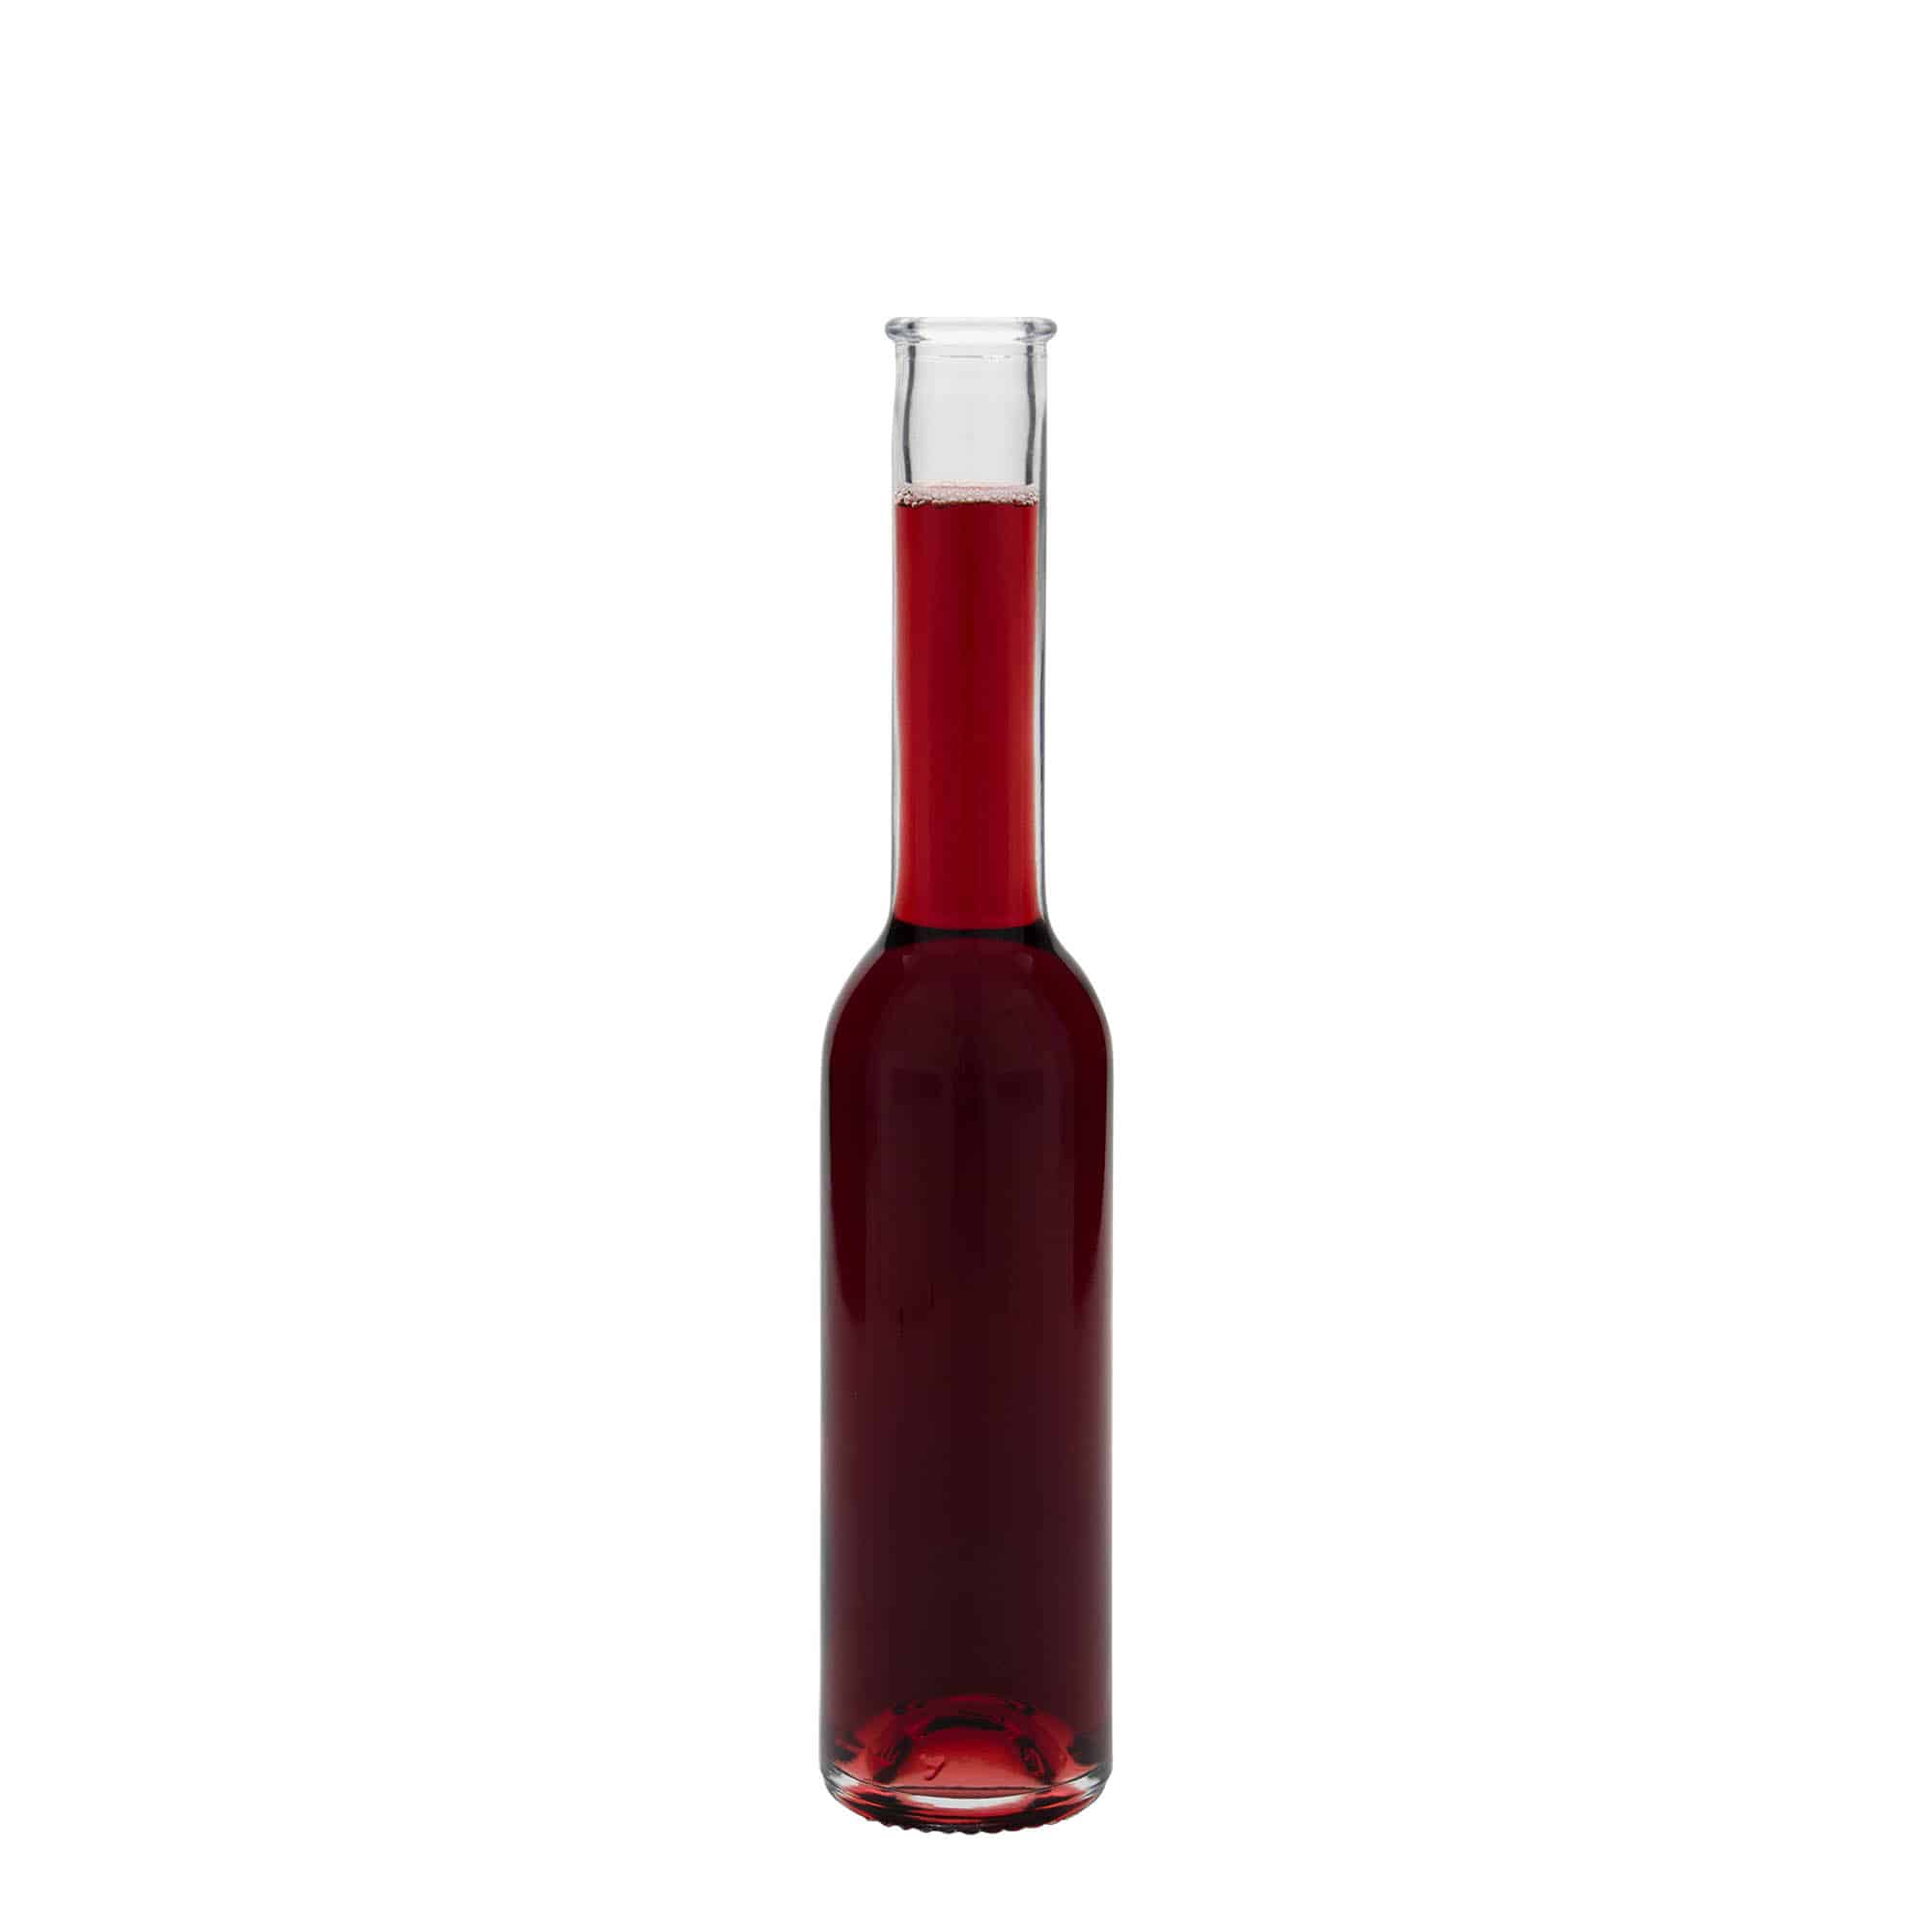 200 ml glass bottle 'Nepera', closure: cork